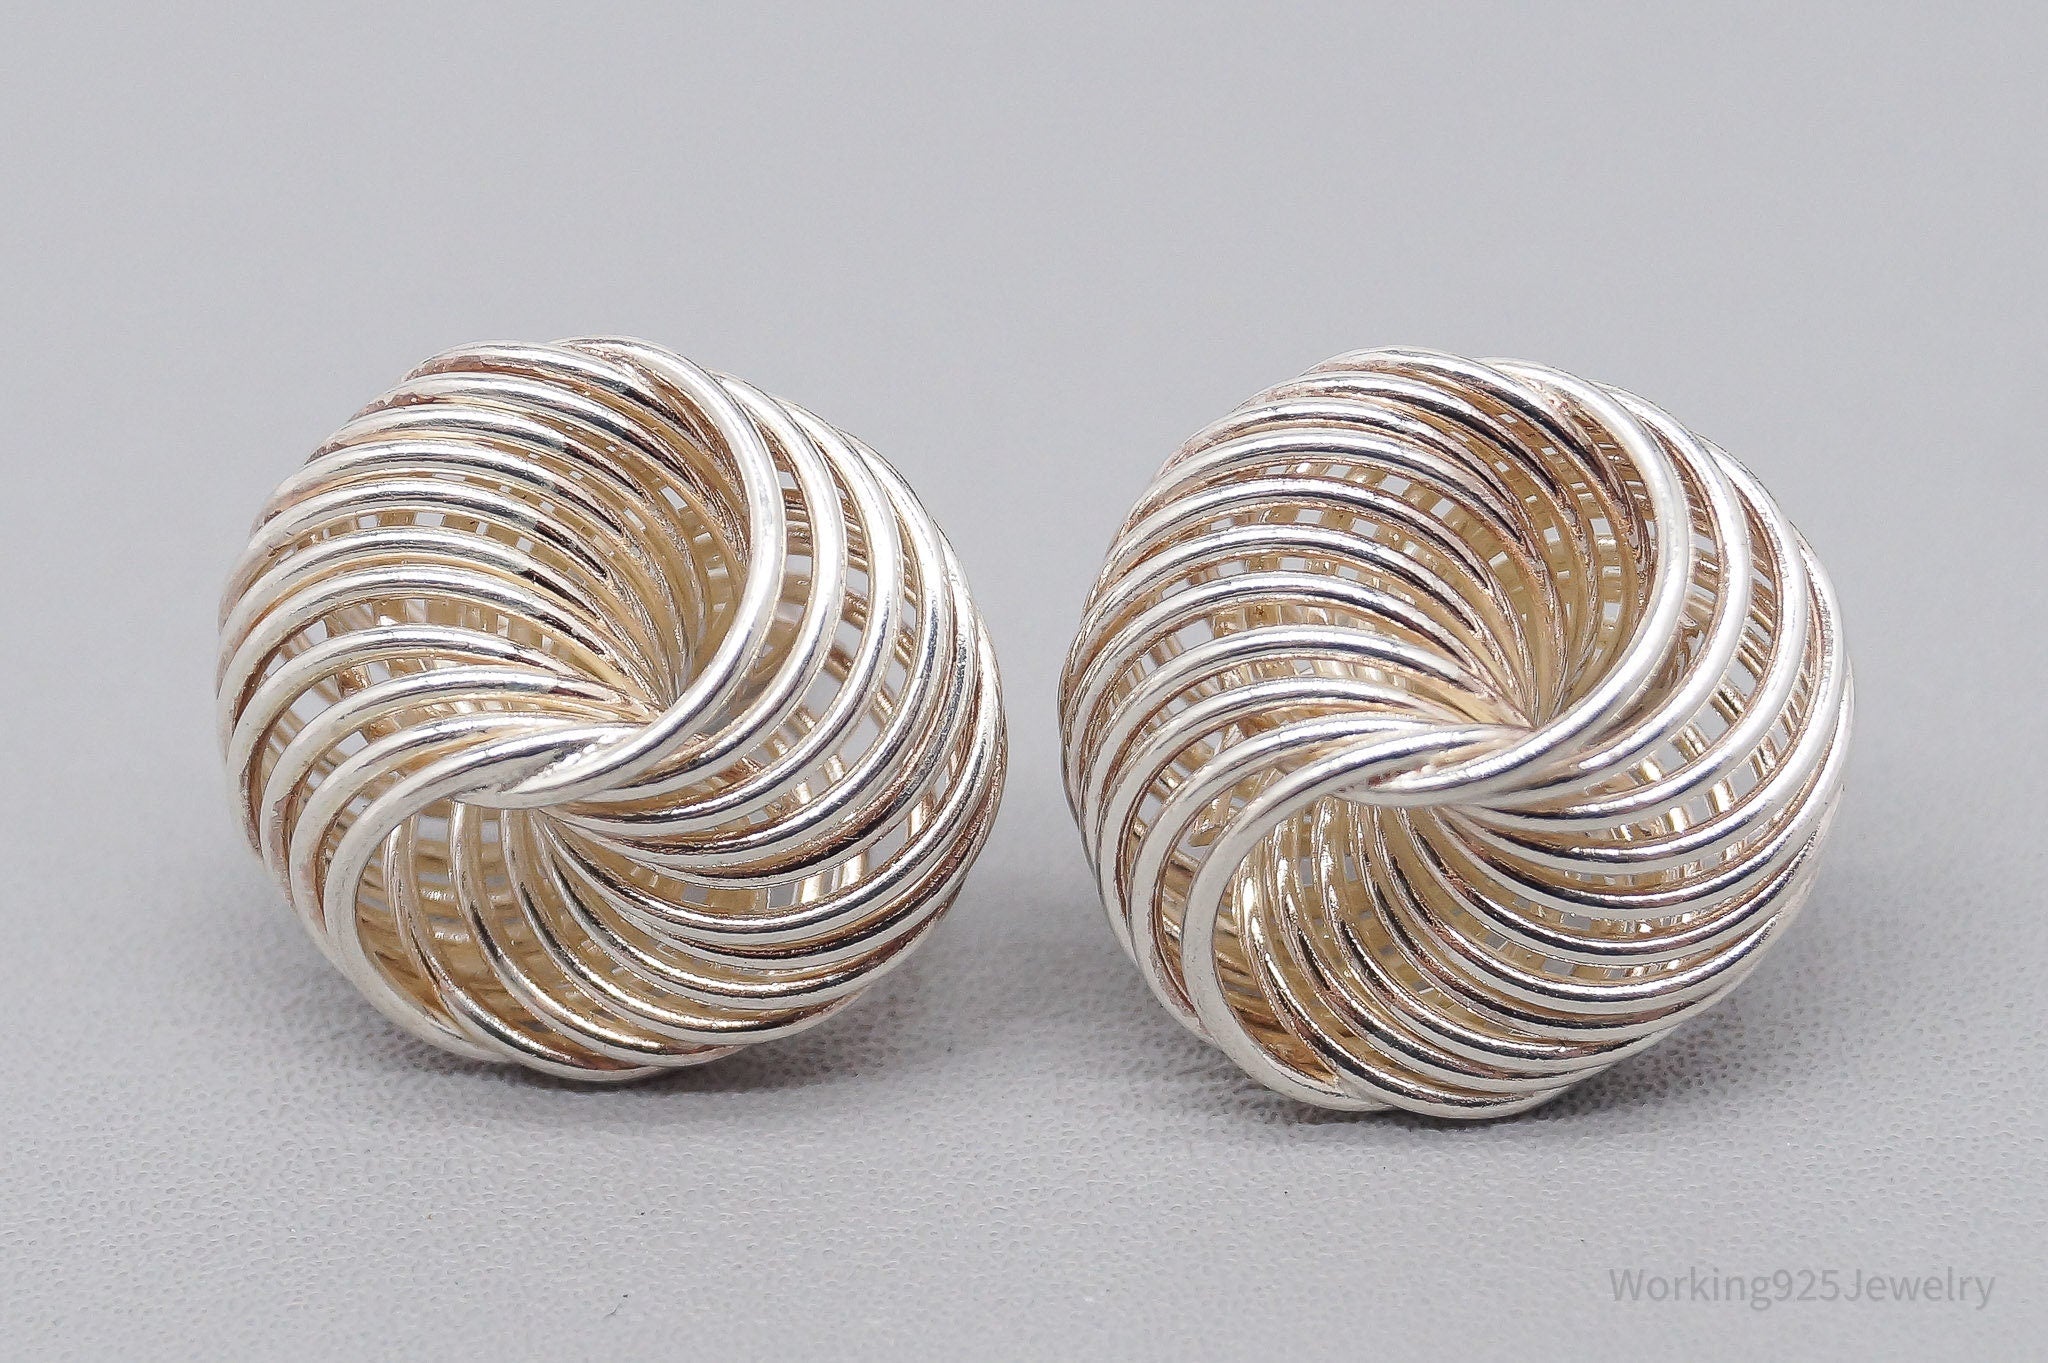 Vintage Sleek Modernist Style Spiral Knot Sterling Silver Earrings